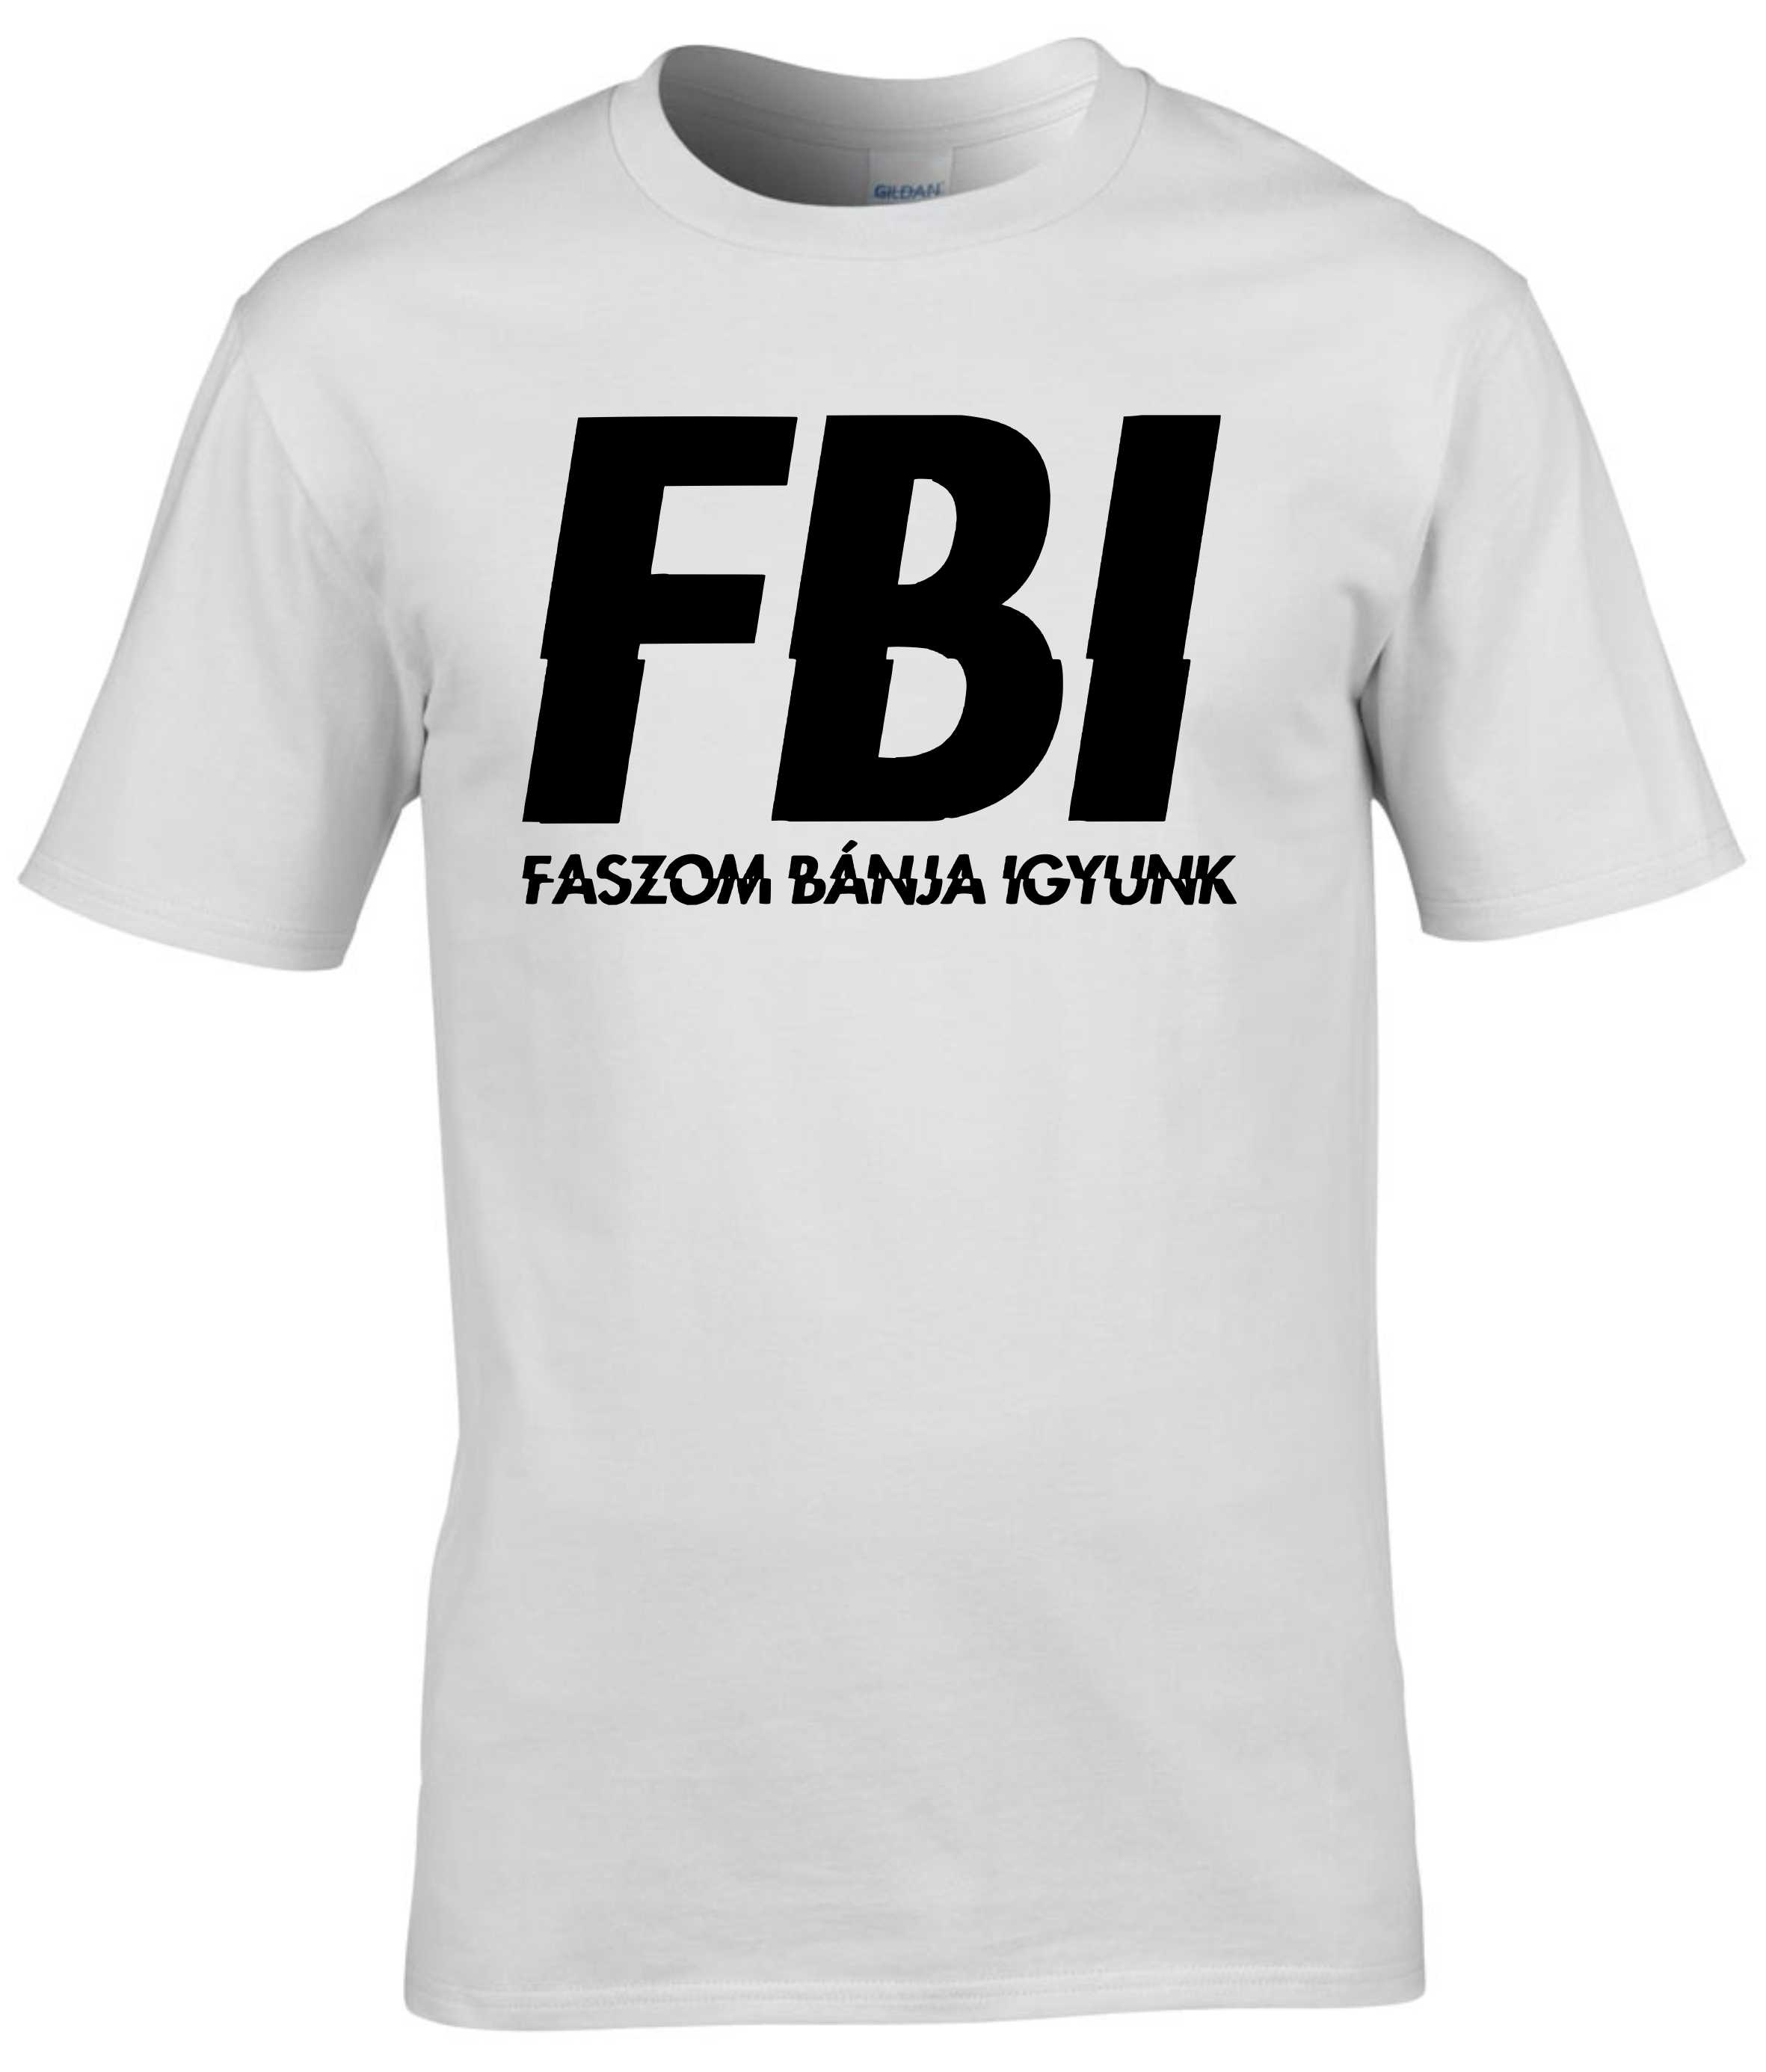 FBI UGYUNK PÓLÓ